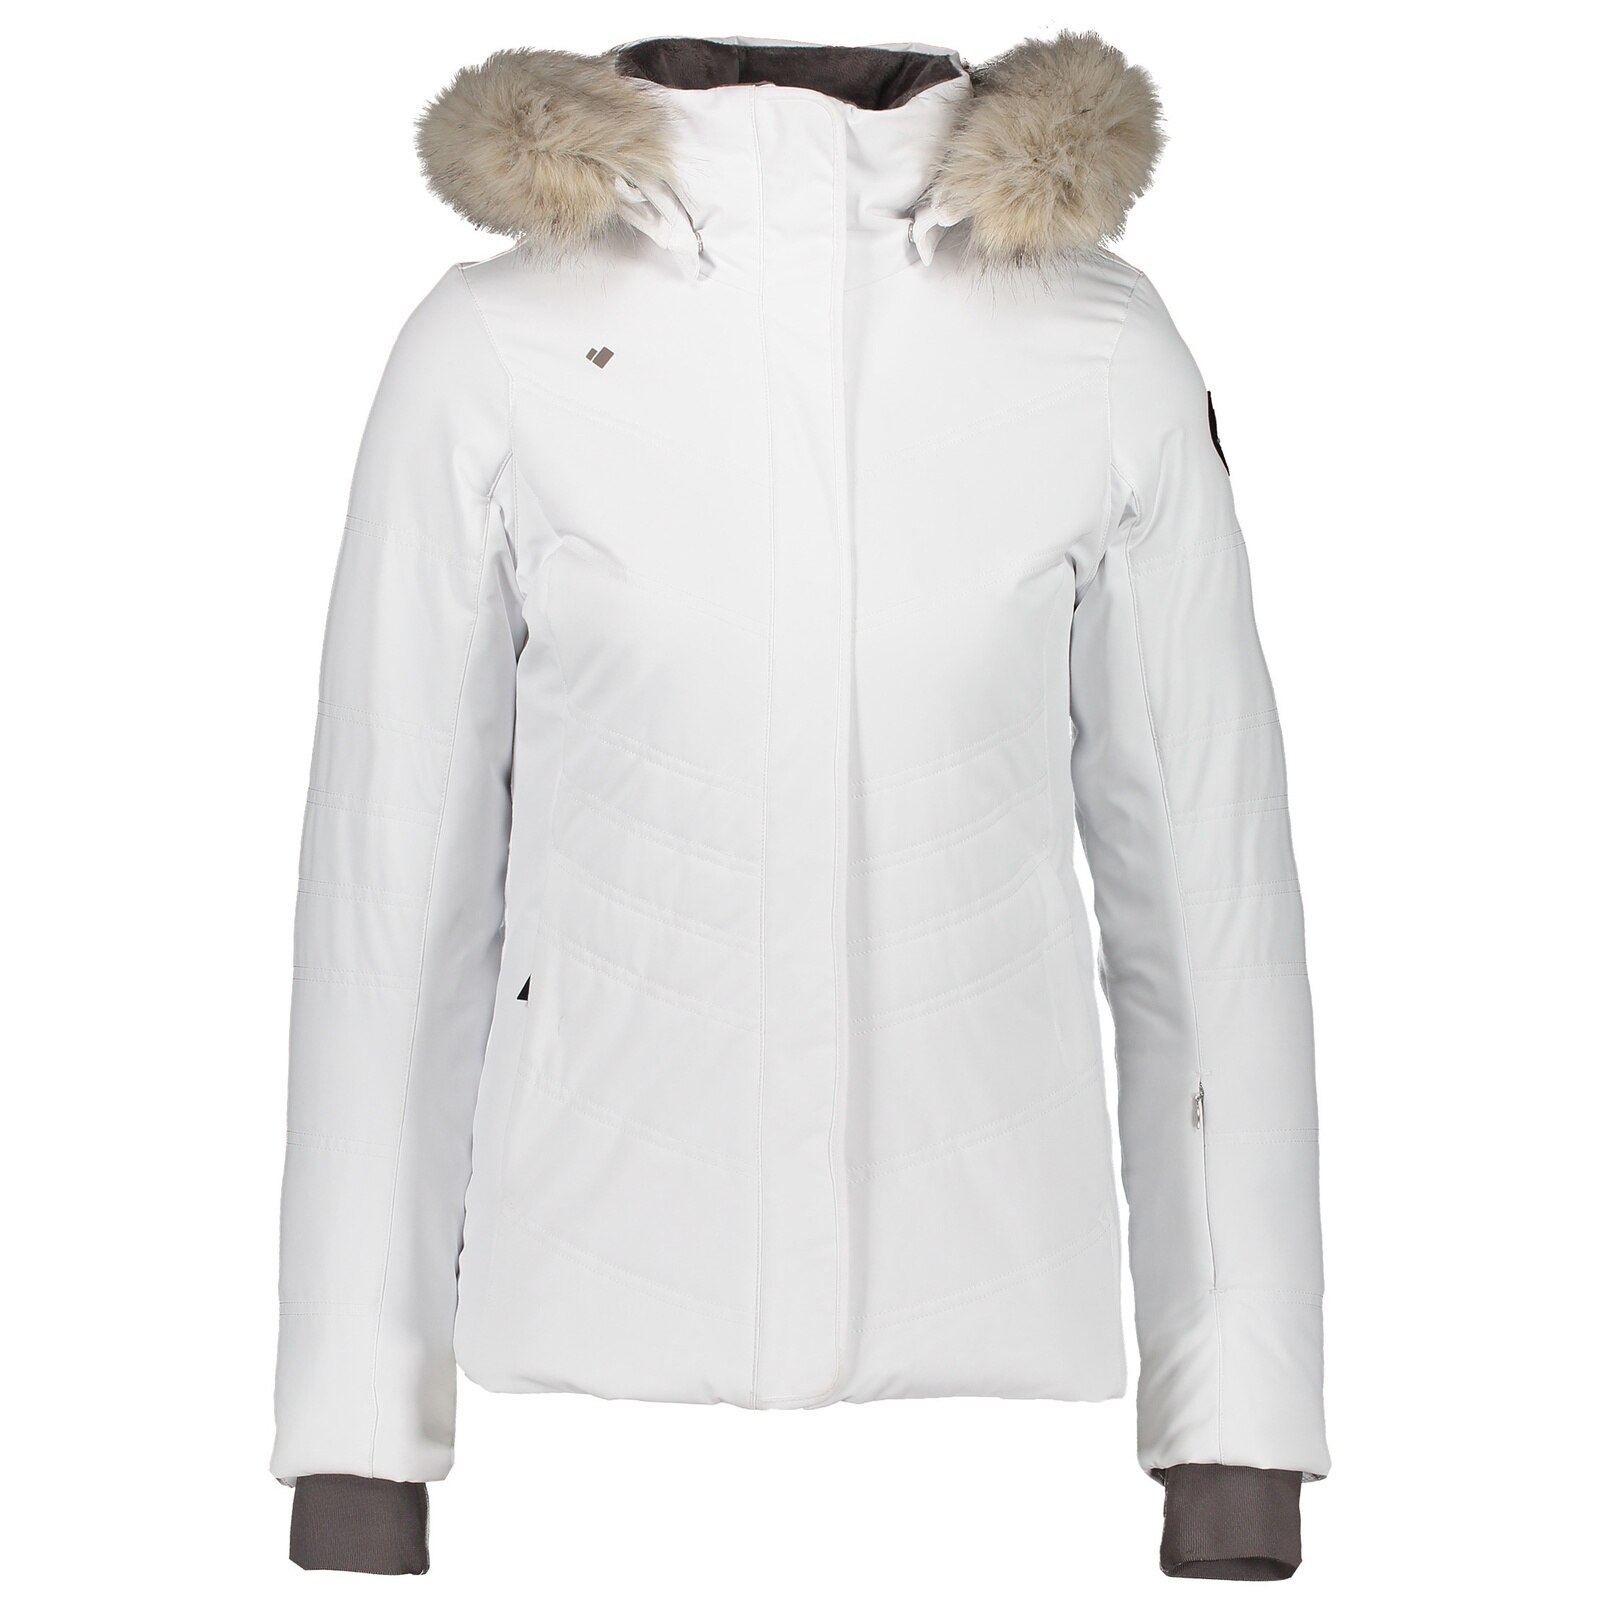 Obermeyer Women's Tuscany Elite Ski Jacket on Sale - Powder7.com